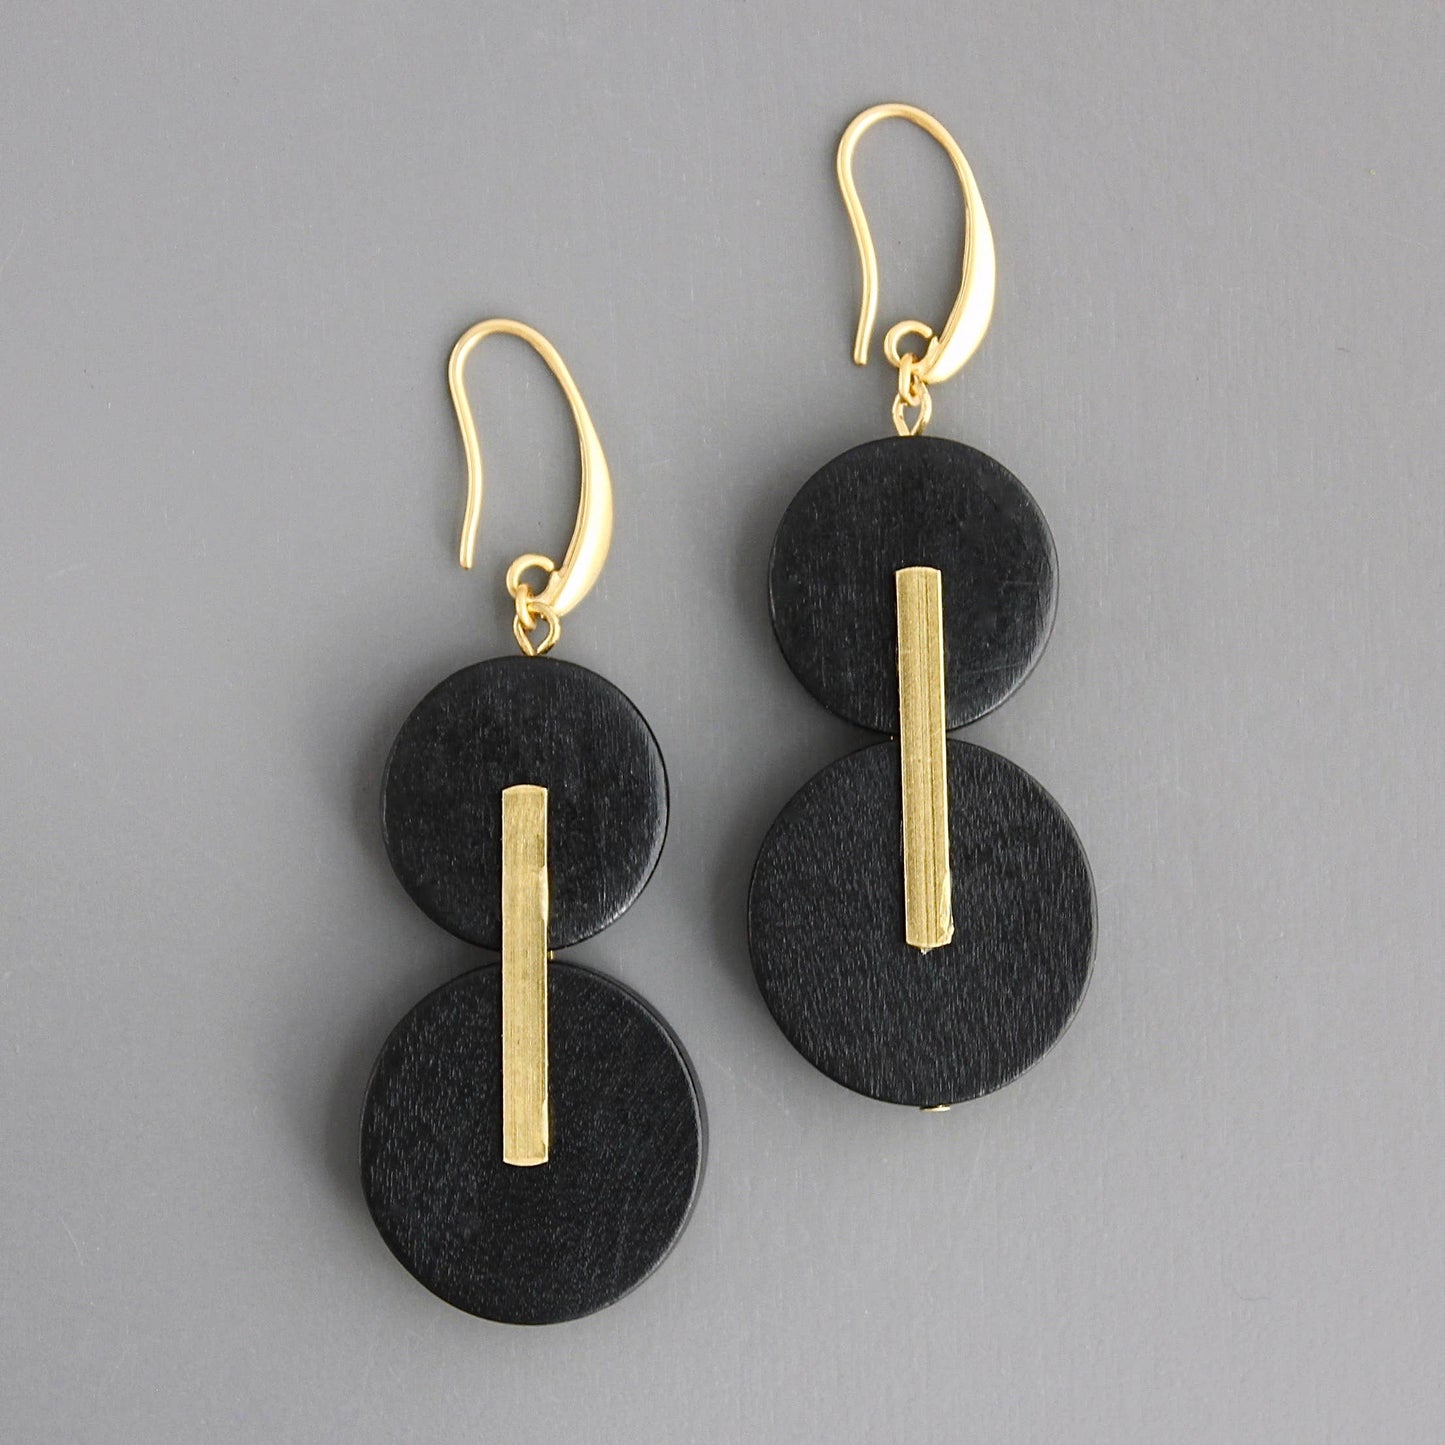 David Aubrey Jewelry - CHRE44 Black wood and brass earrings